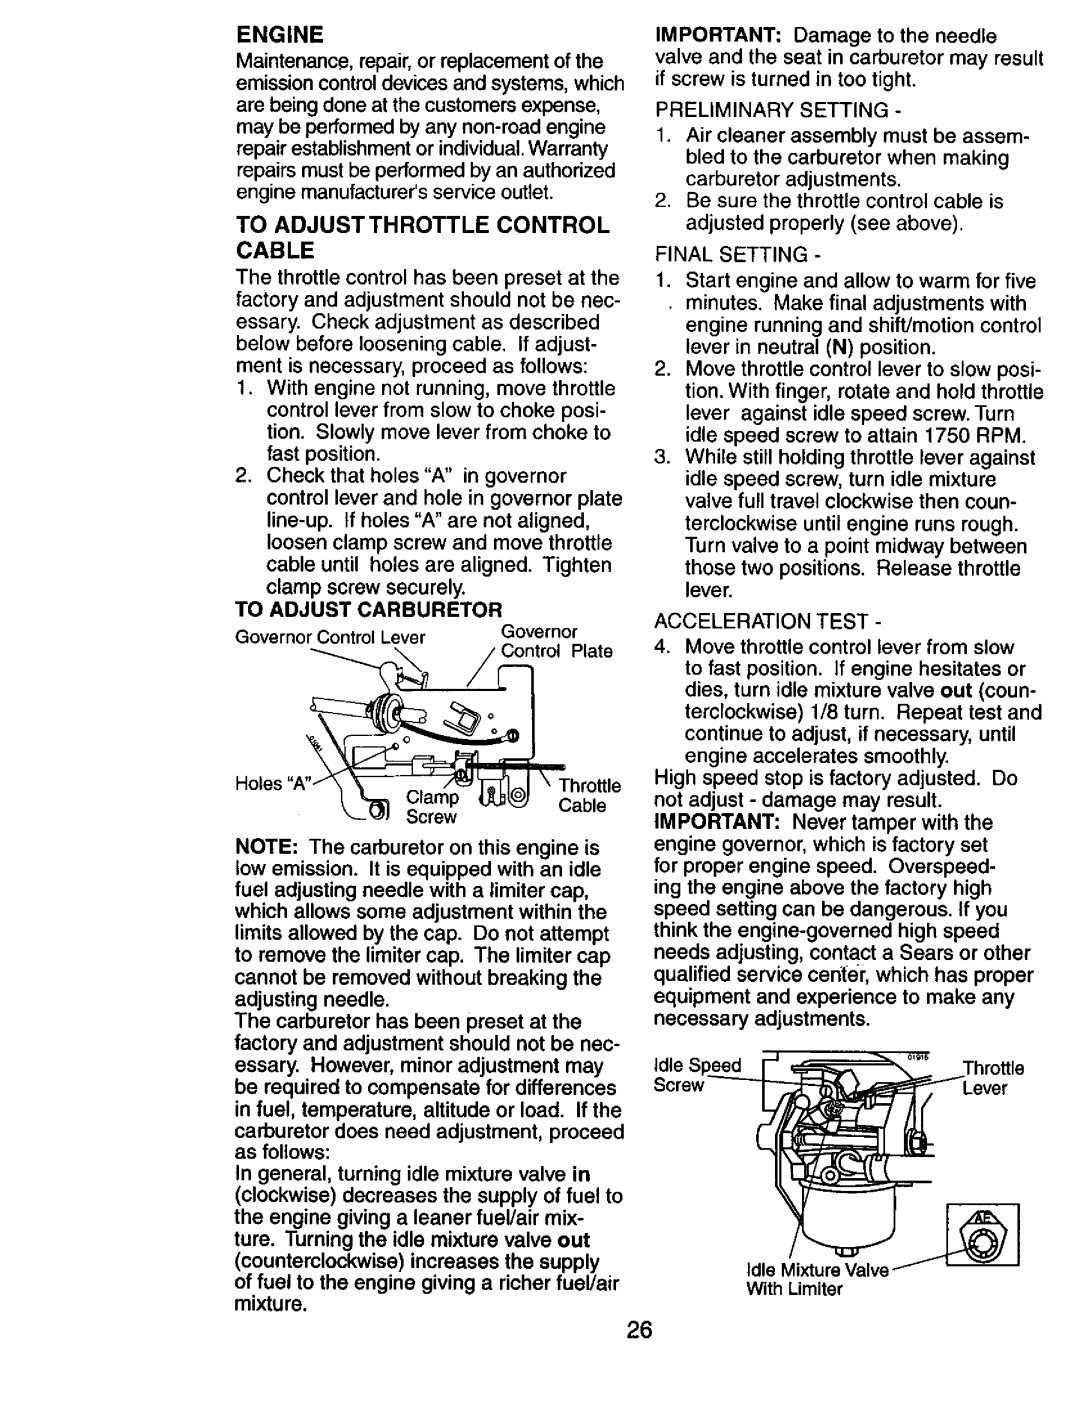 Craftsman 917.274031 owner manual To Adjustthrottle Control Cable, To Adjust Carburetor, With Limiter 